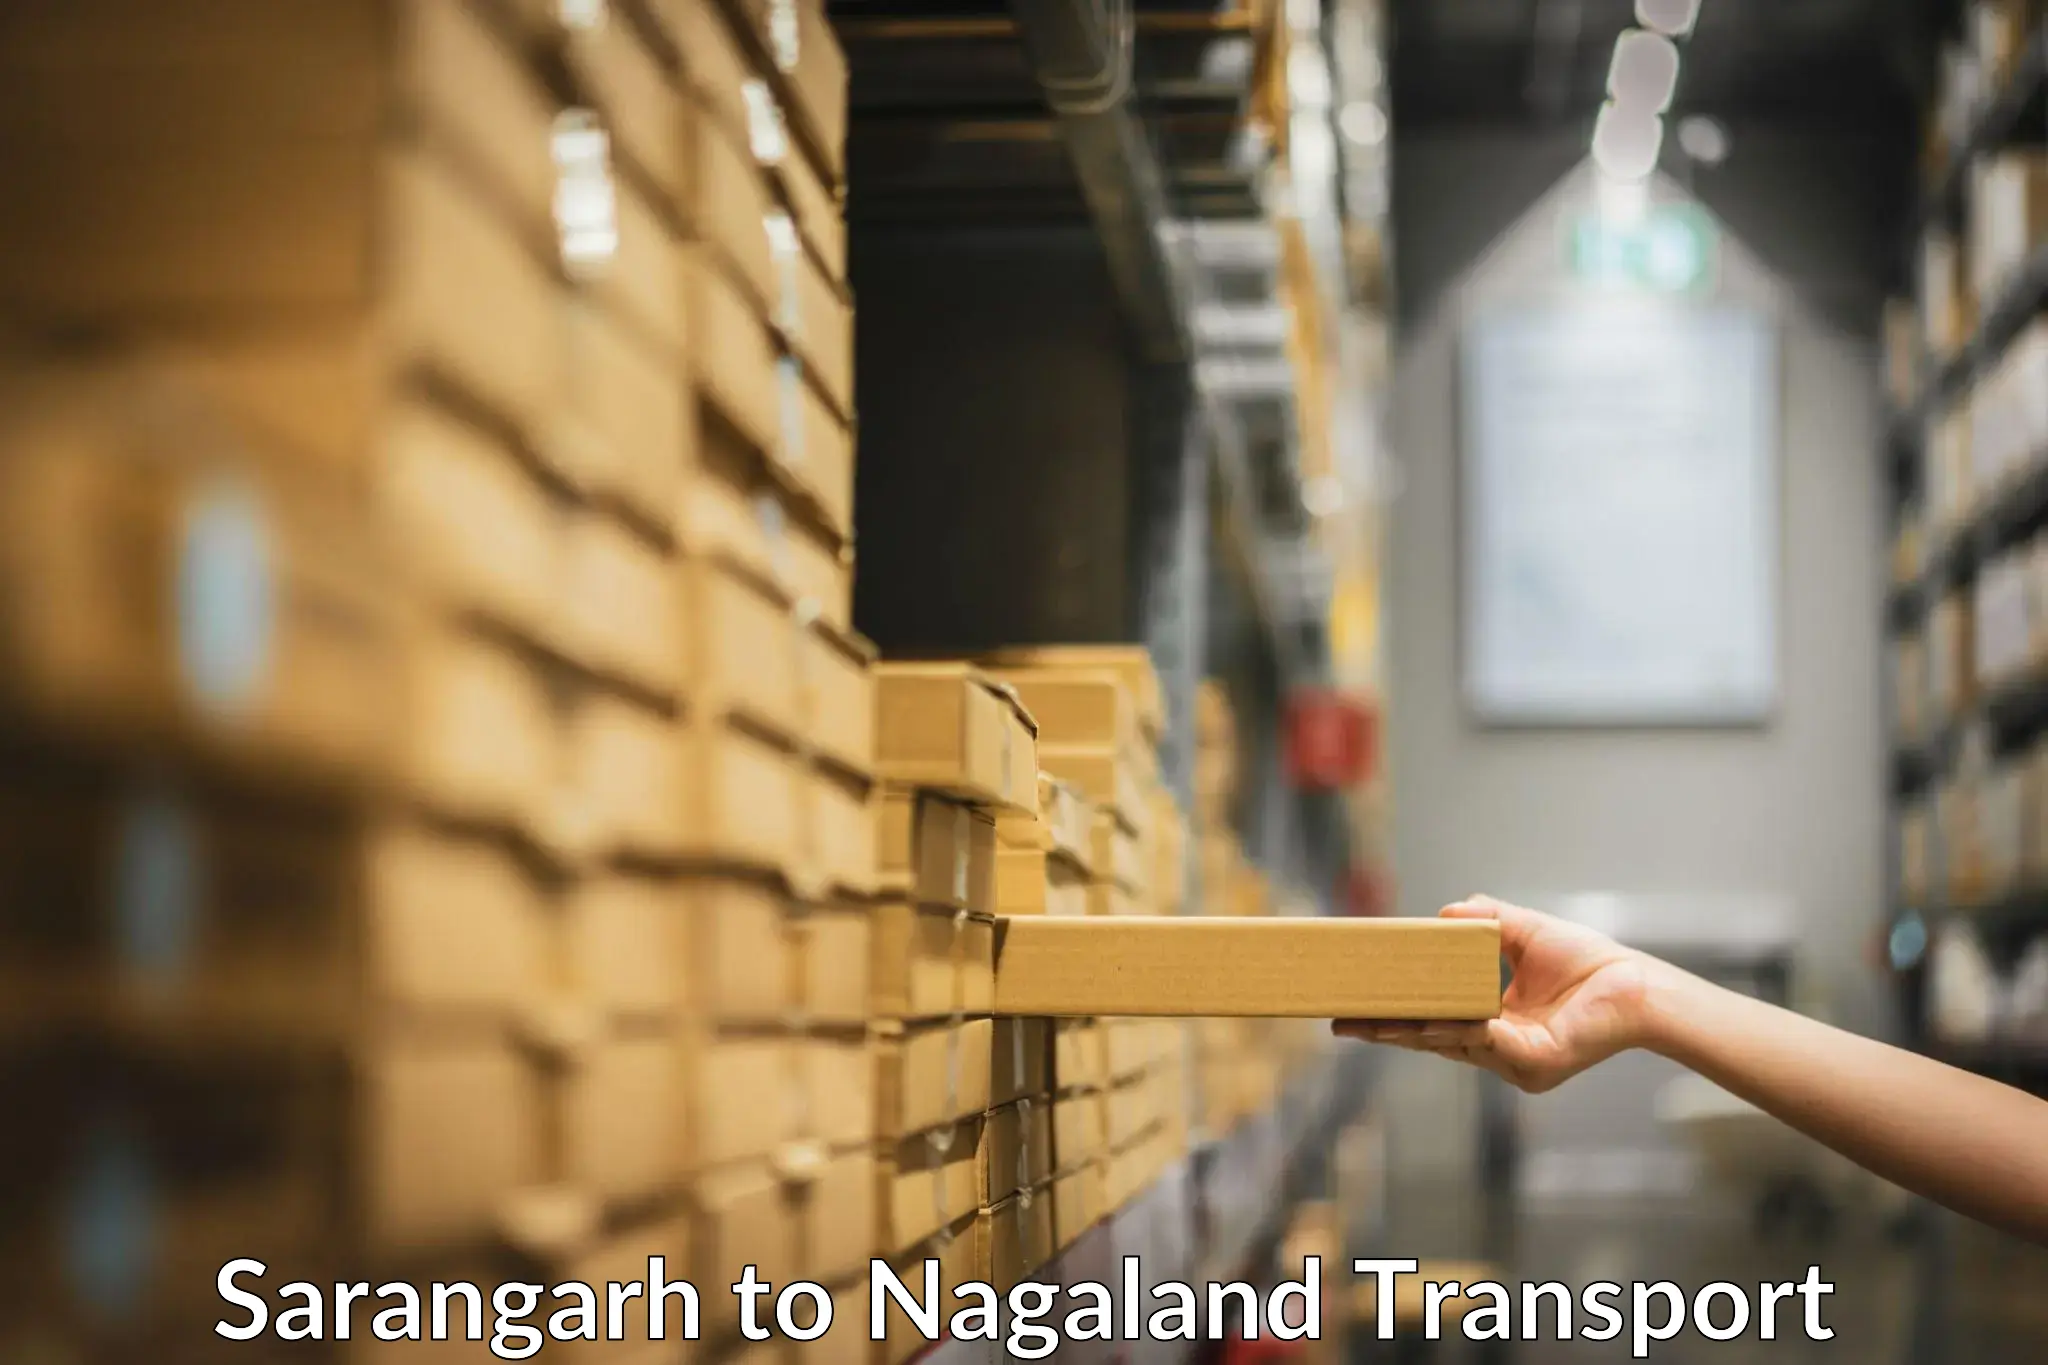 Shipping partner Sarangarh to Nagaland